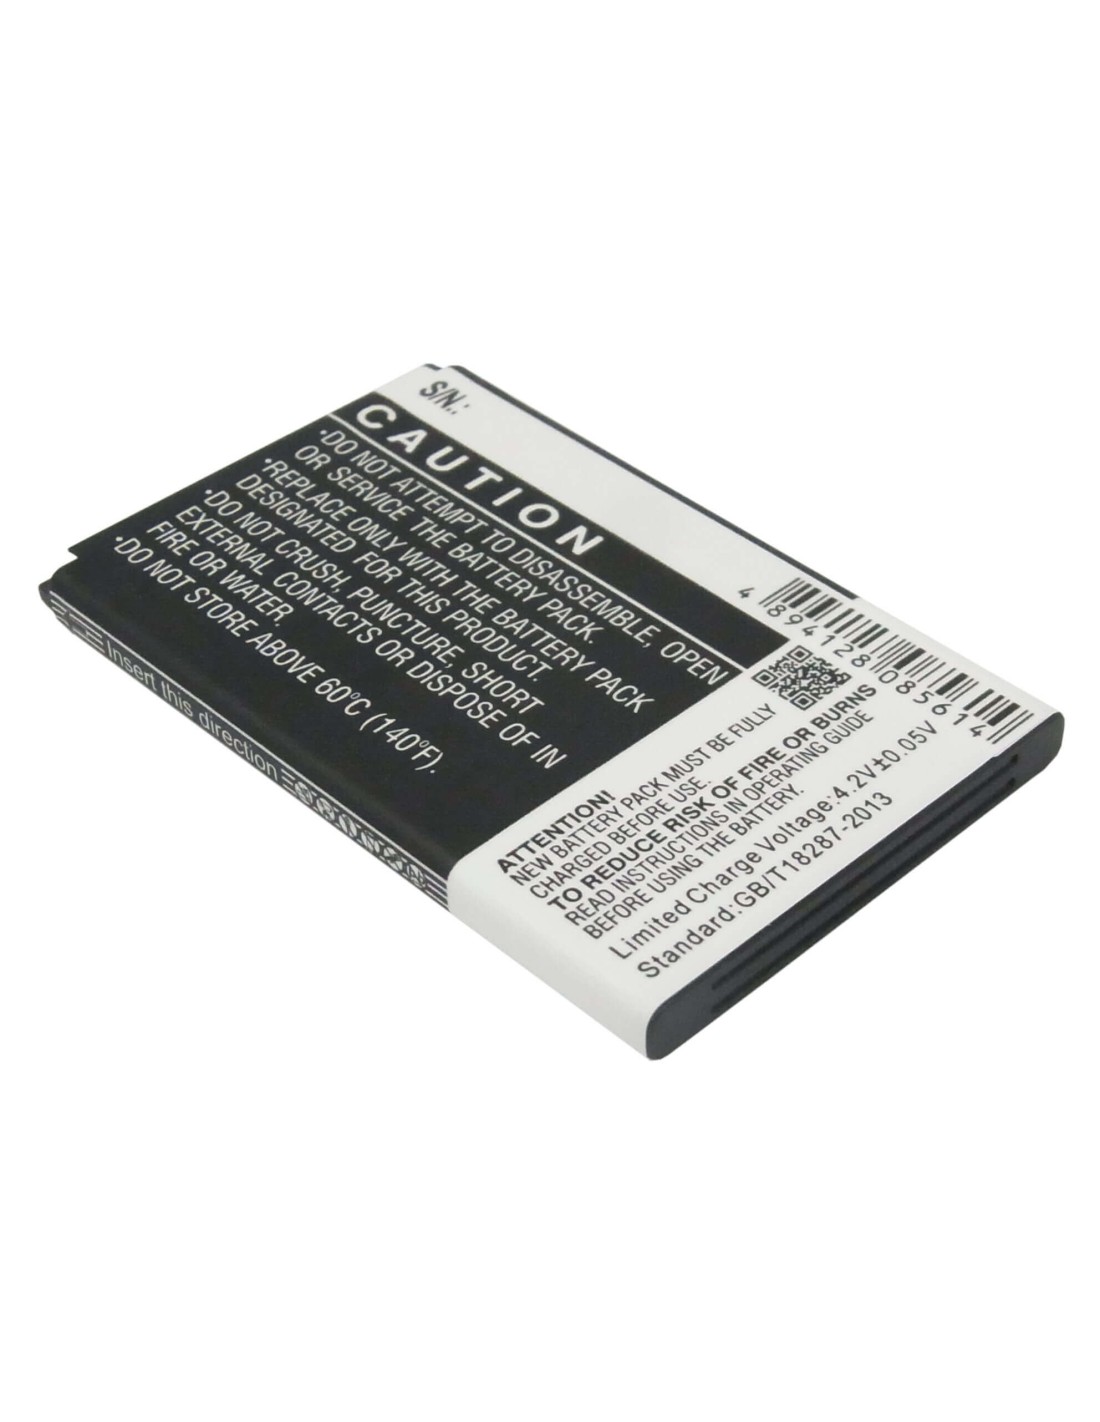 Battery for Huawei E5-0315, E50318, E5-0318 3.7V, 1500mAh - 5.55Wh